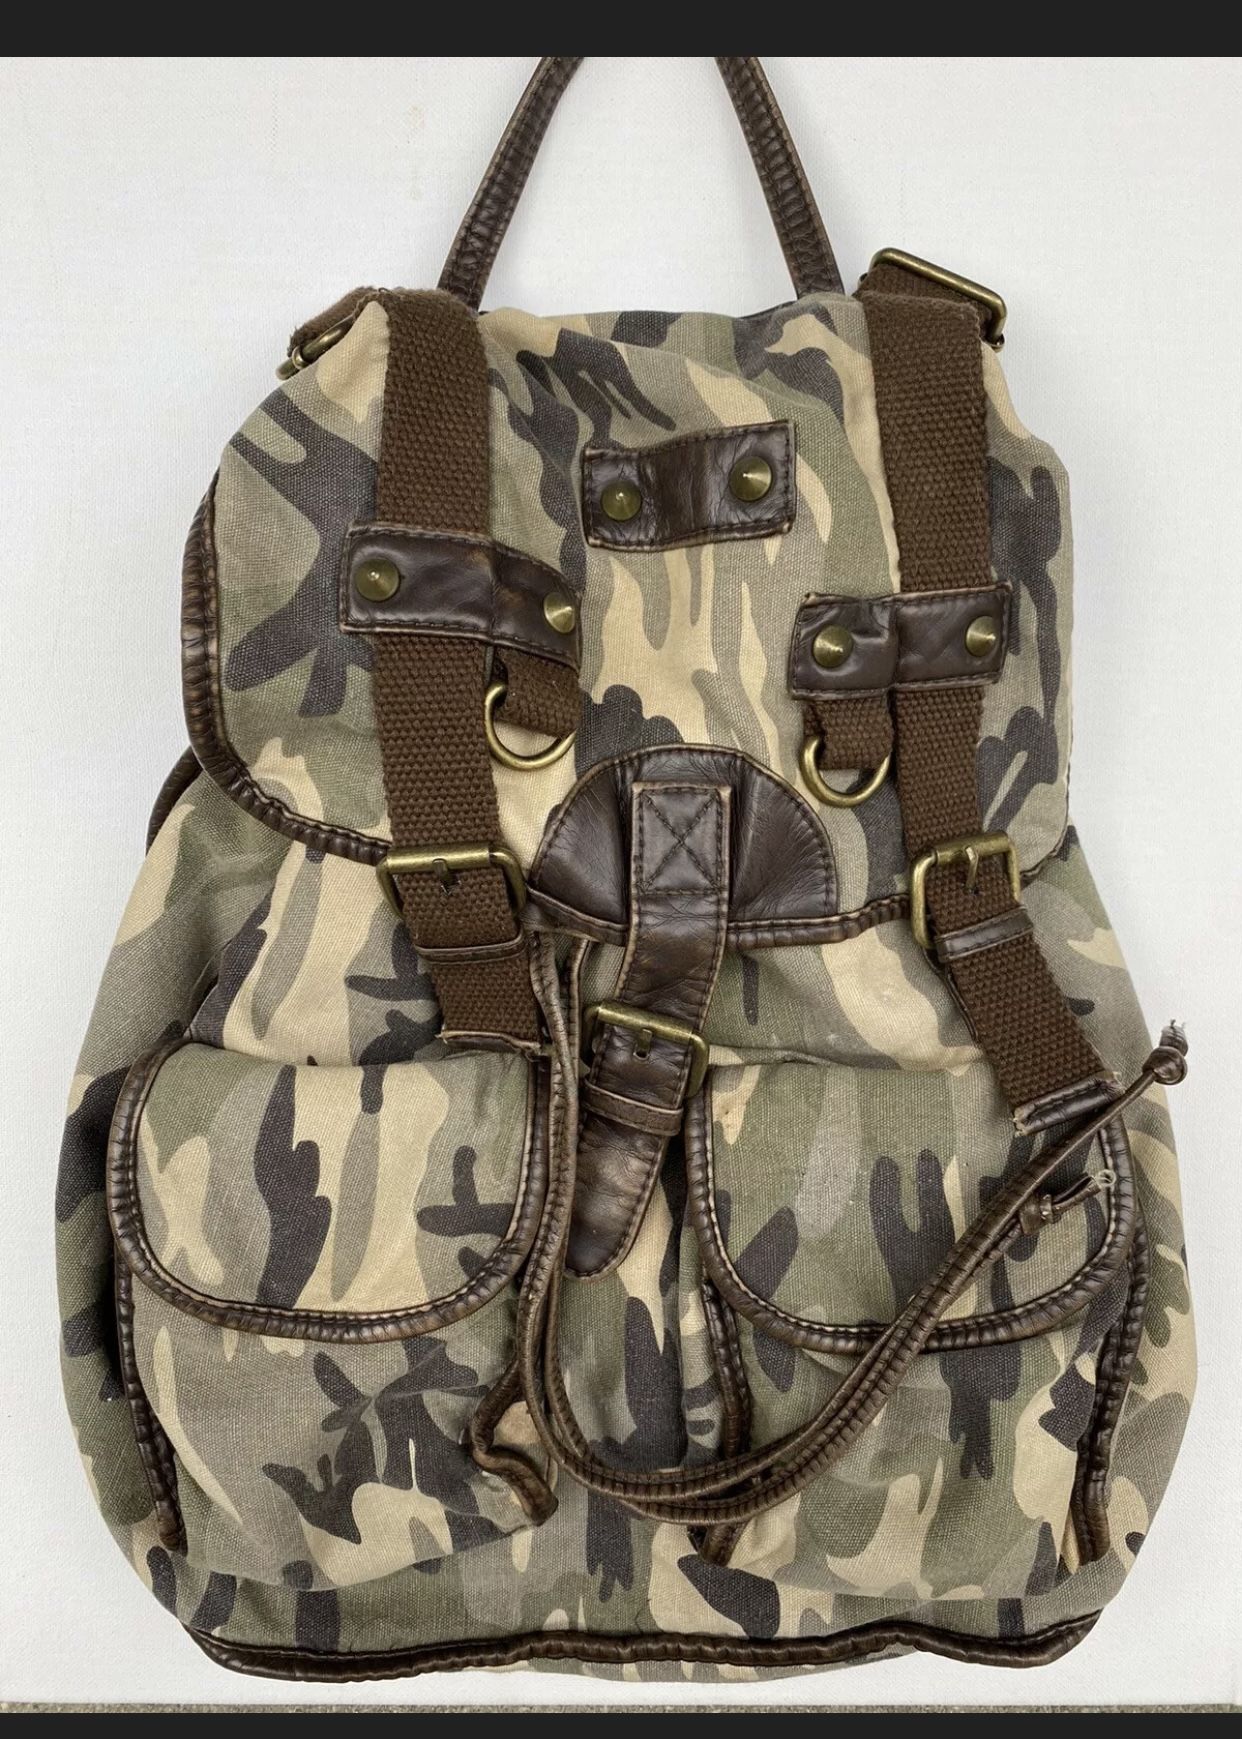 Zumiez Canvas Camouflage Rucksack Bookbag Casual Travel Backpack